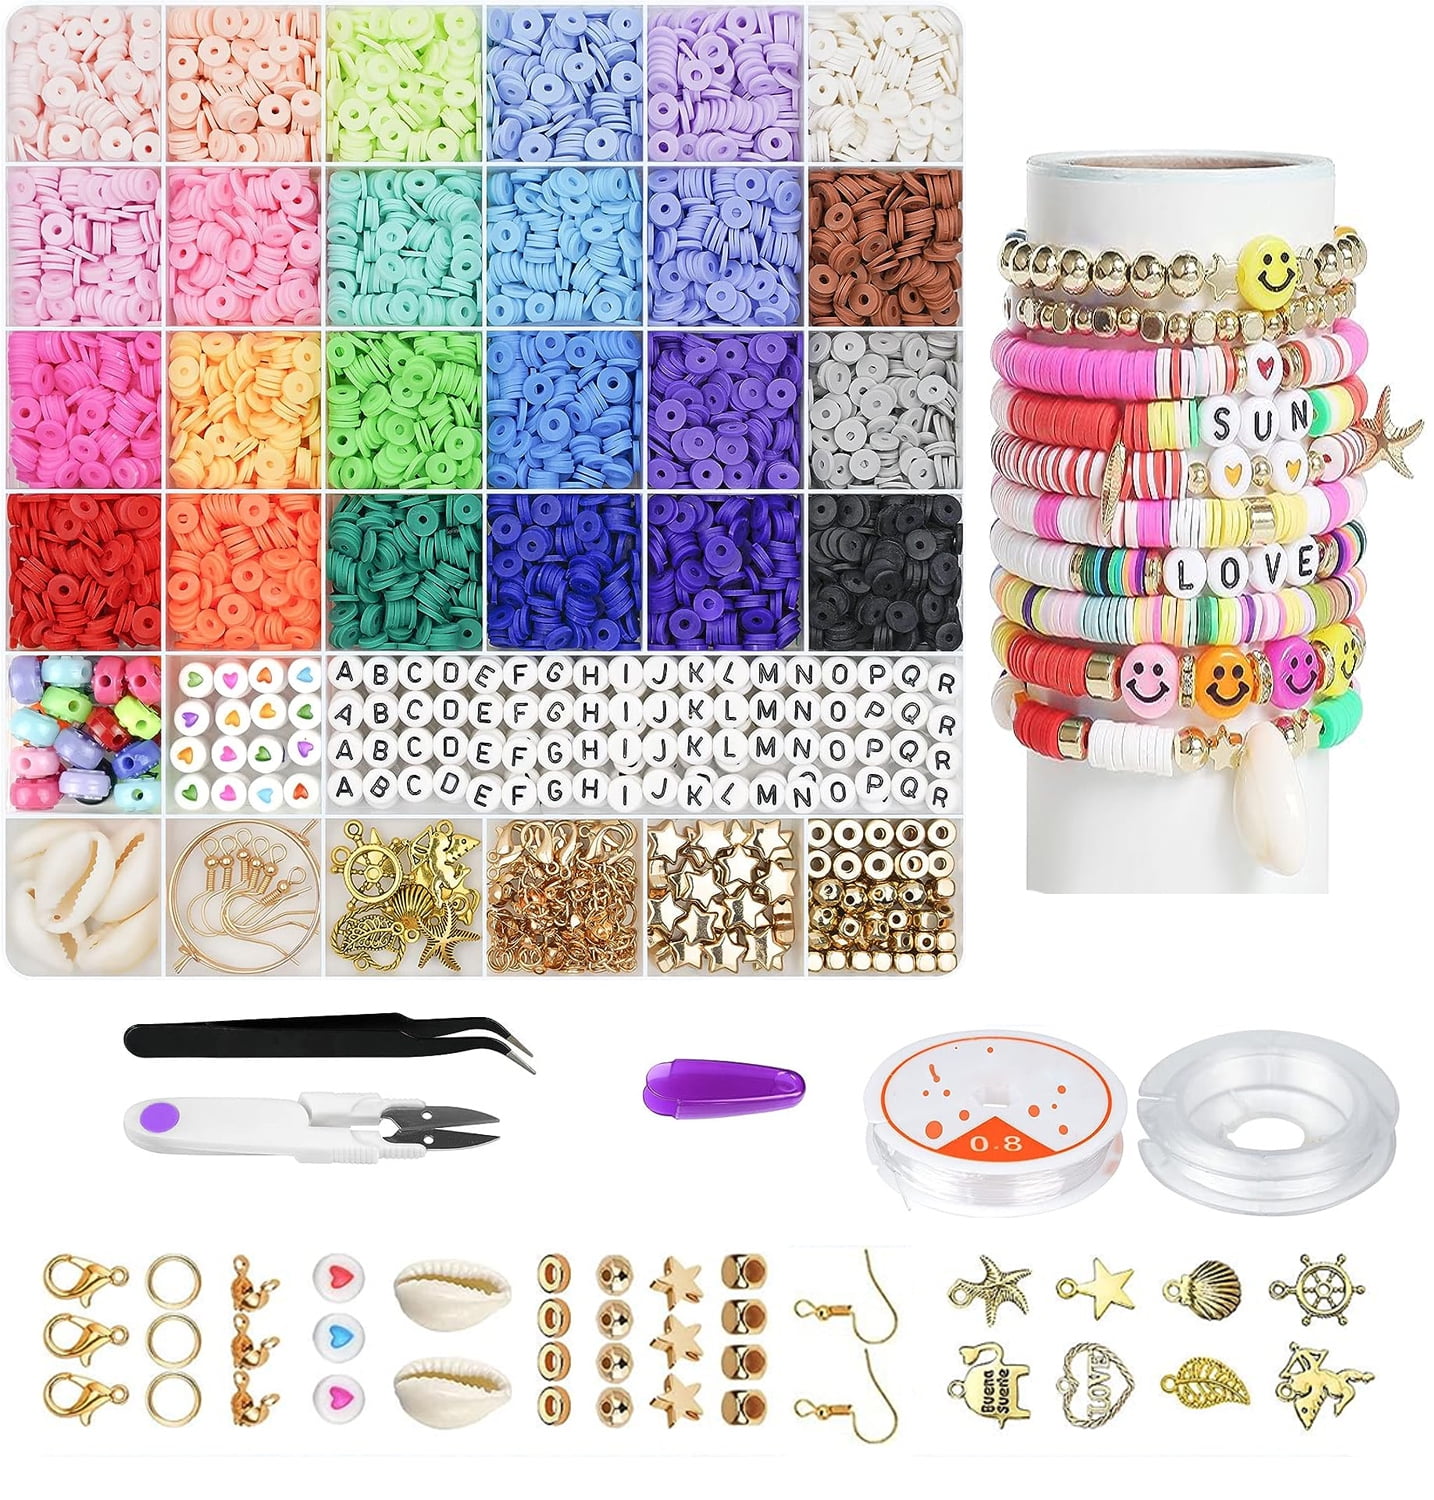 Koralakiri 1440Pcs Alphabet Beads Kit, Acrylic Letter Beads Bulk, 4x7mm Round  Letter Beads for Crafting Bracelets Necklaces Jewelry Making(Black&White) 